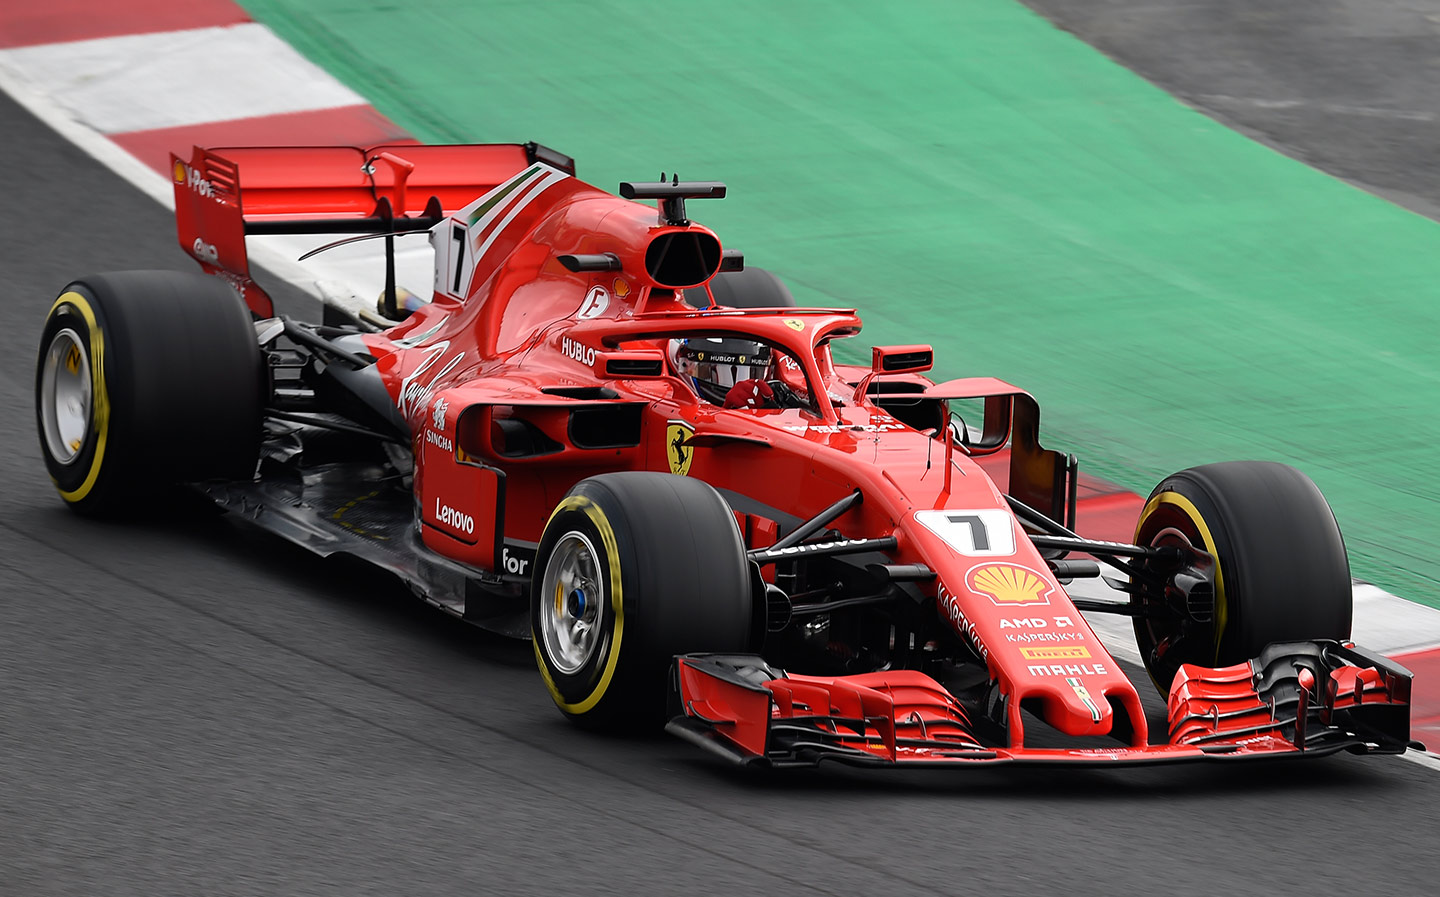 F1 cars 2018: Ferrari SF-71H